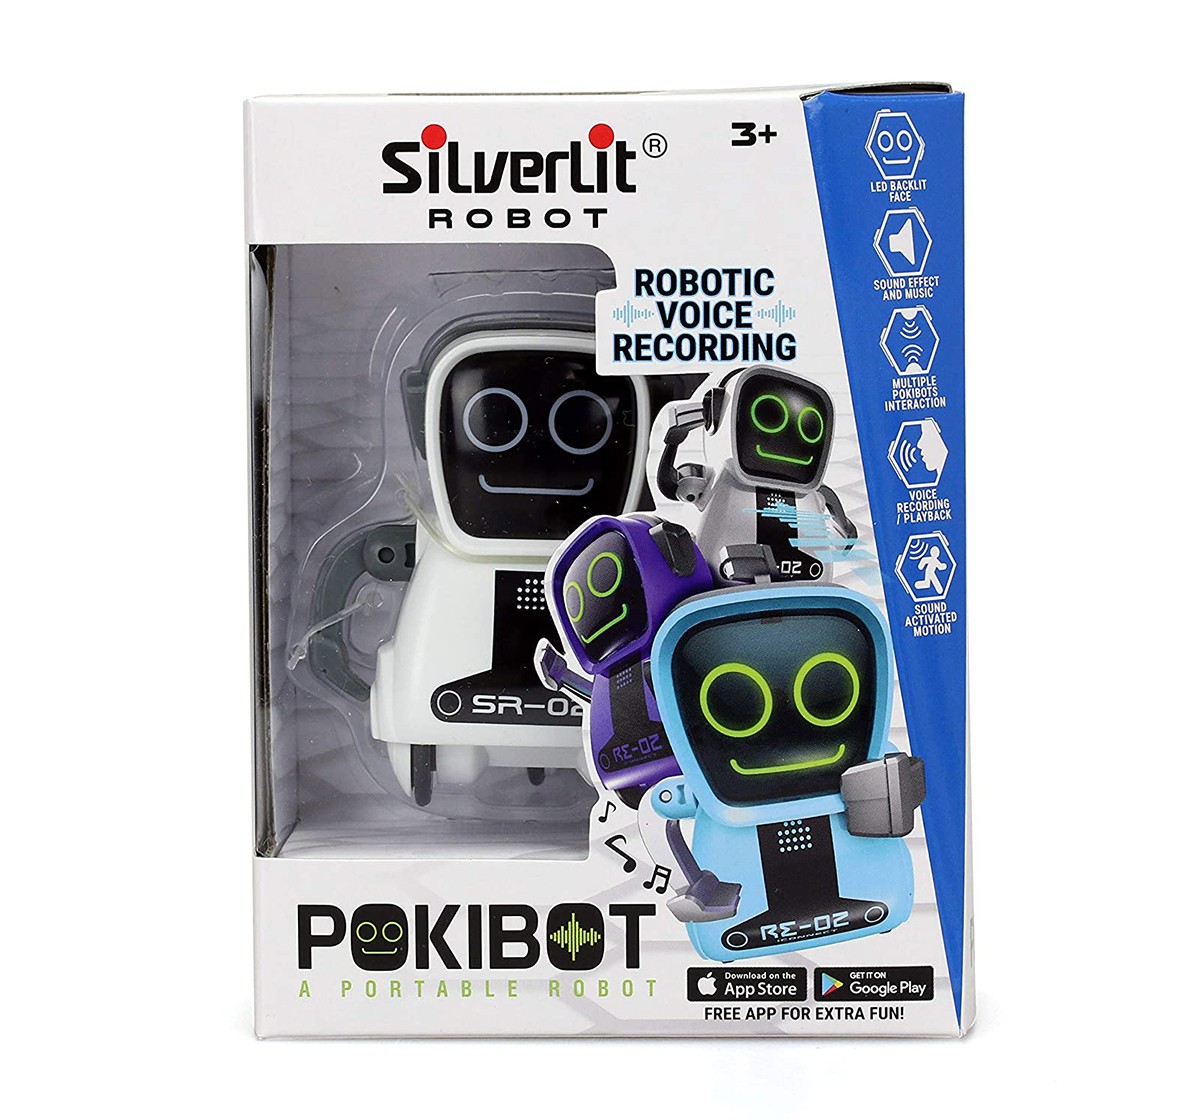 Silverlit Pokibot In 3 Colors-White/Blue/Purple Robotics for Kids age 3Y+ 